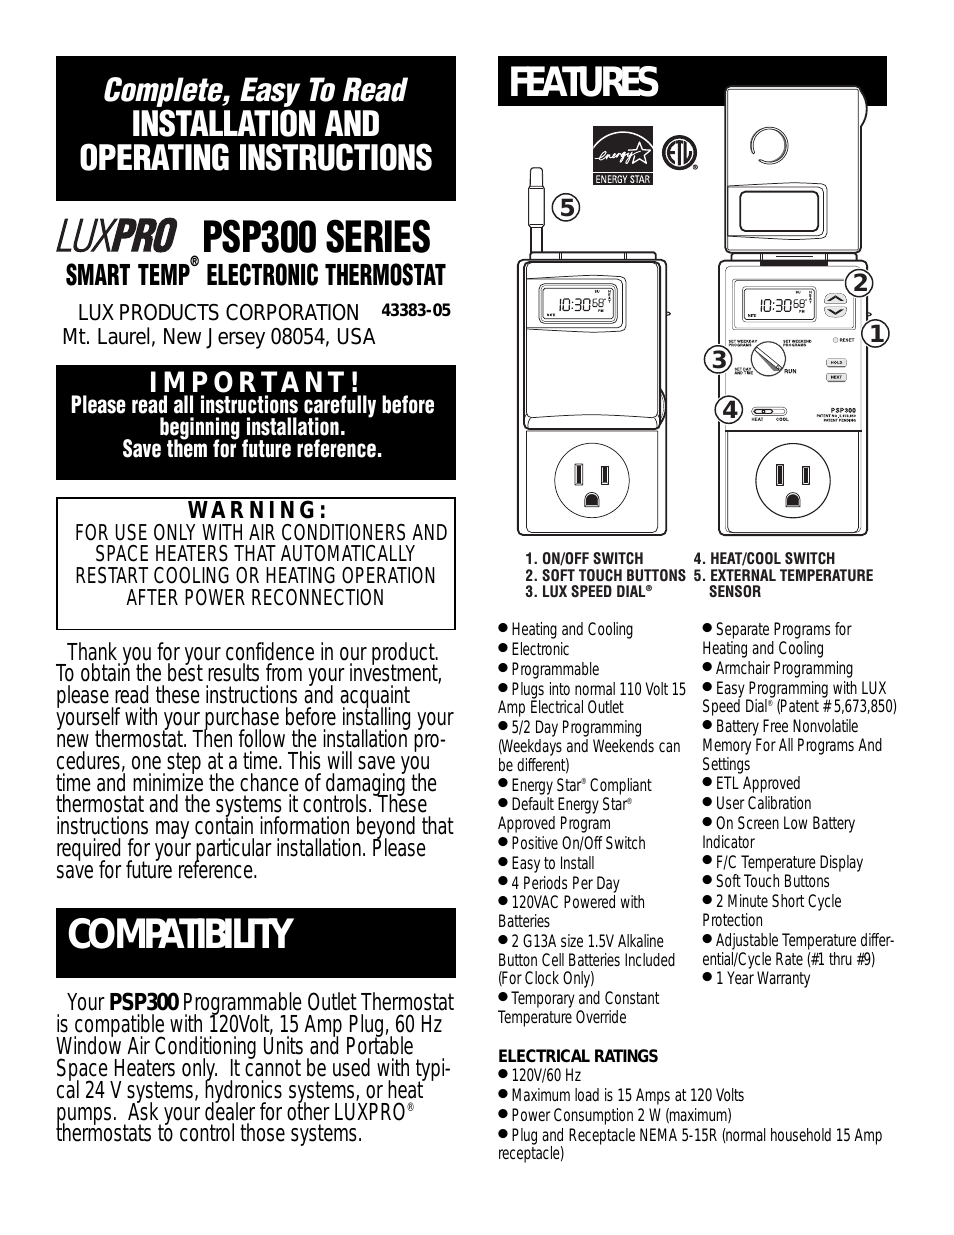 Smart Temp PSP300 Series